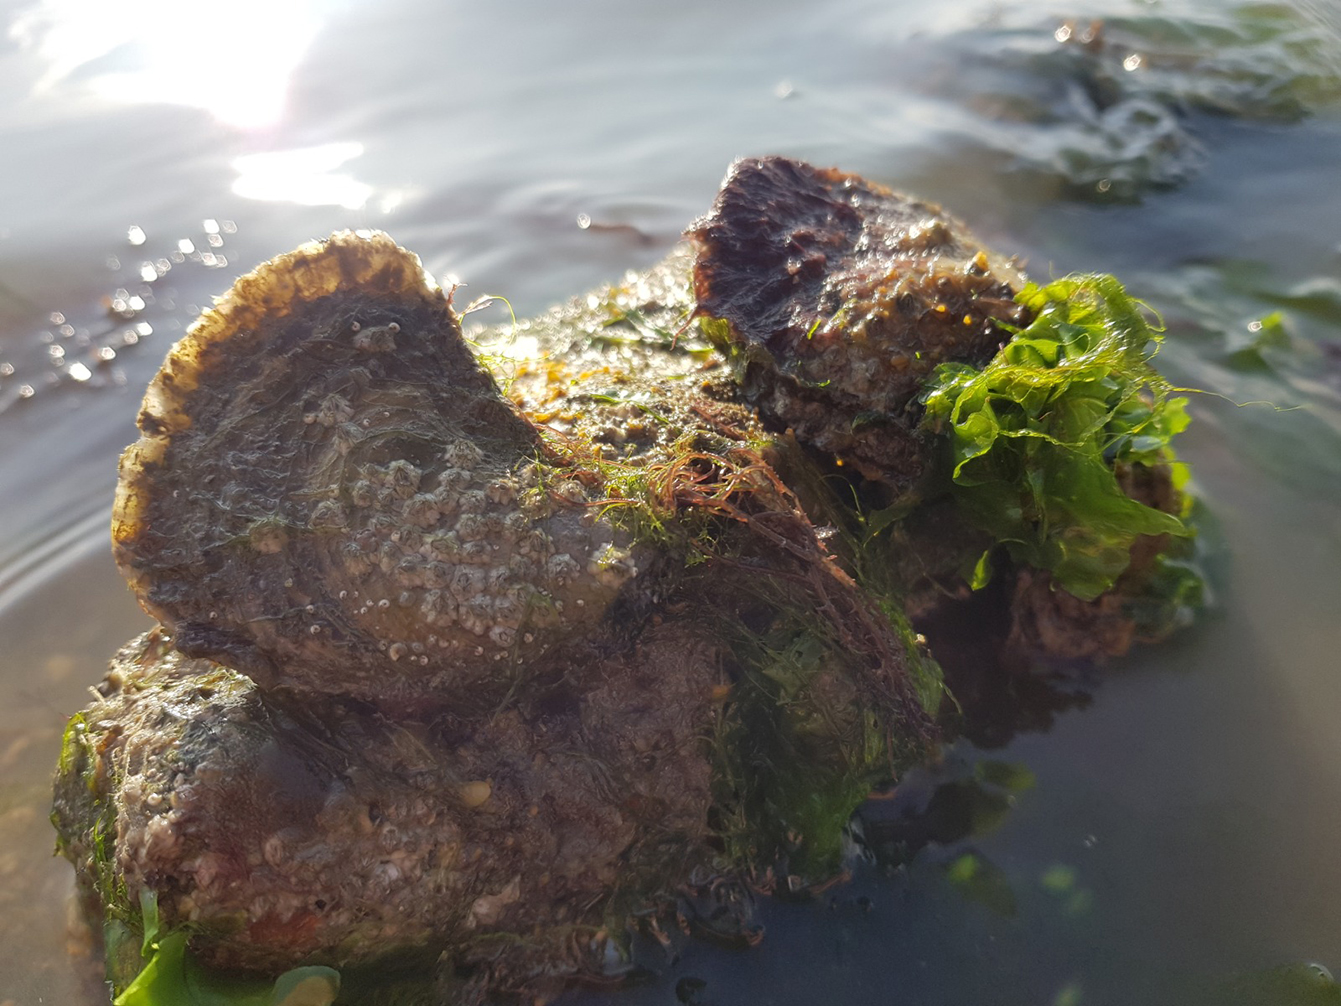 Intertidal native oyster